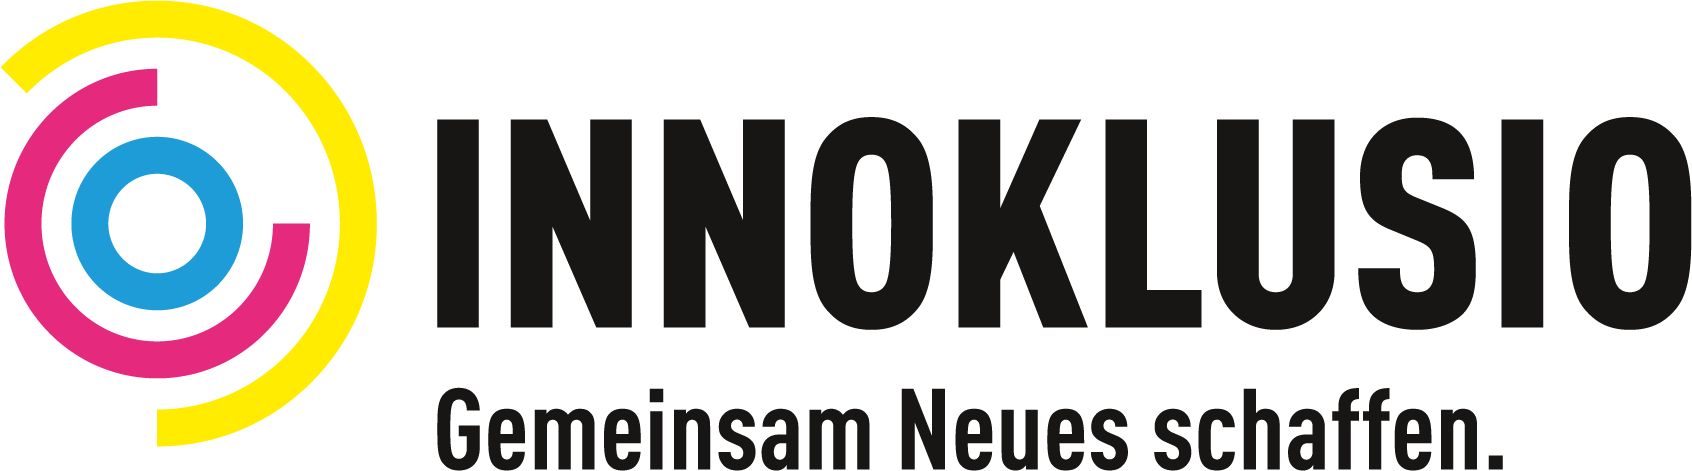 Innoklusio_Logo-Claim_RGB.png